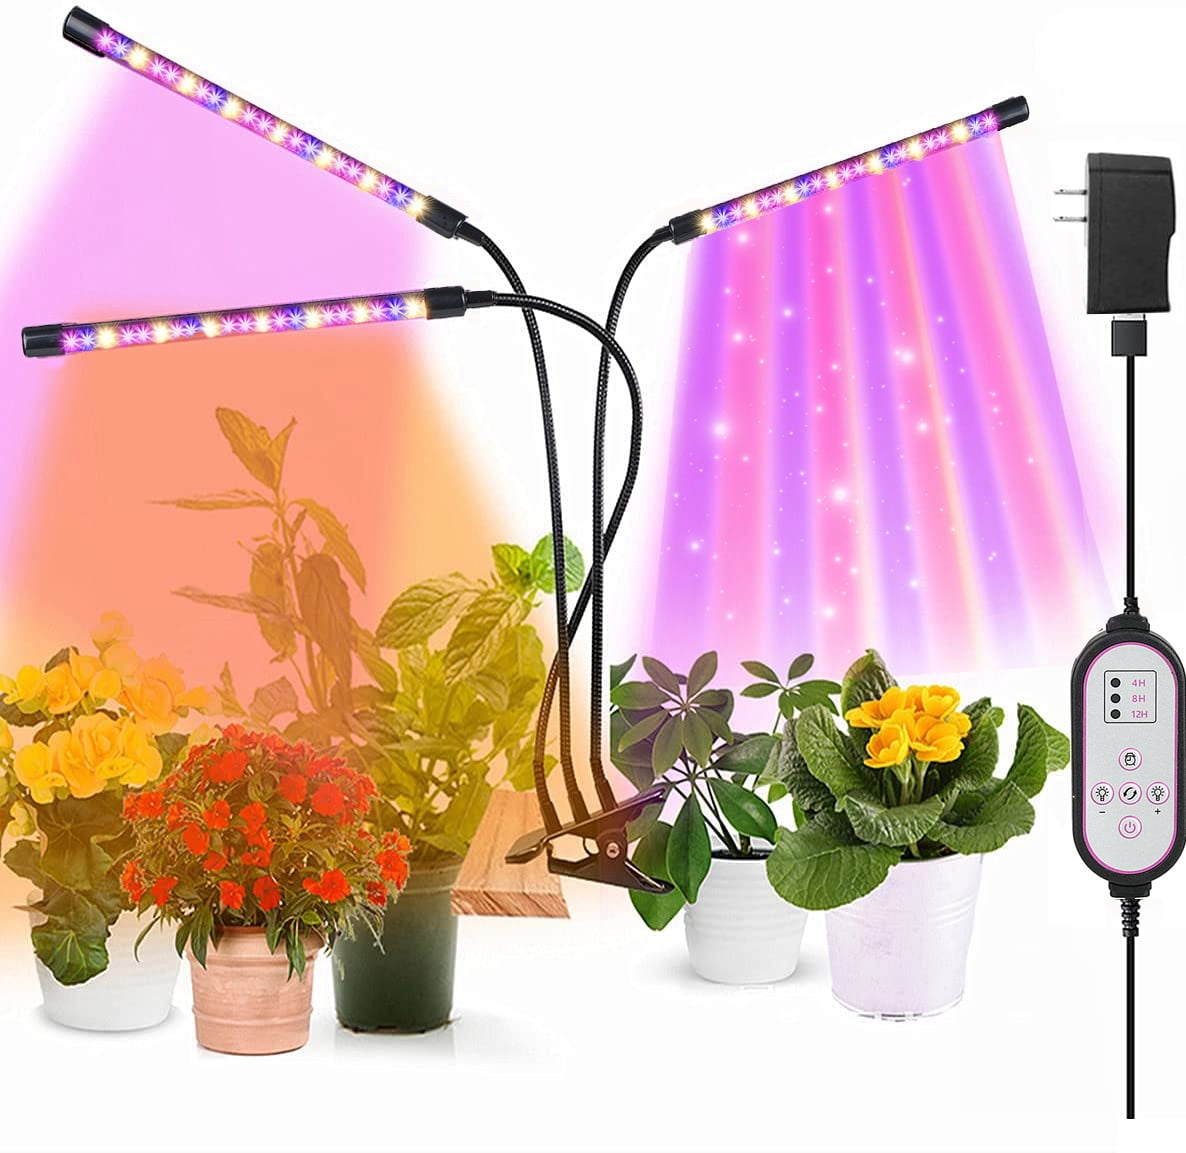 Full Spectrum 60W 144LED Grow Light Plants Growing Lamp Hydroponics Indoor USA 